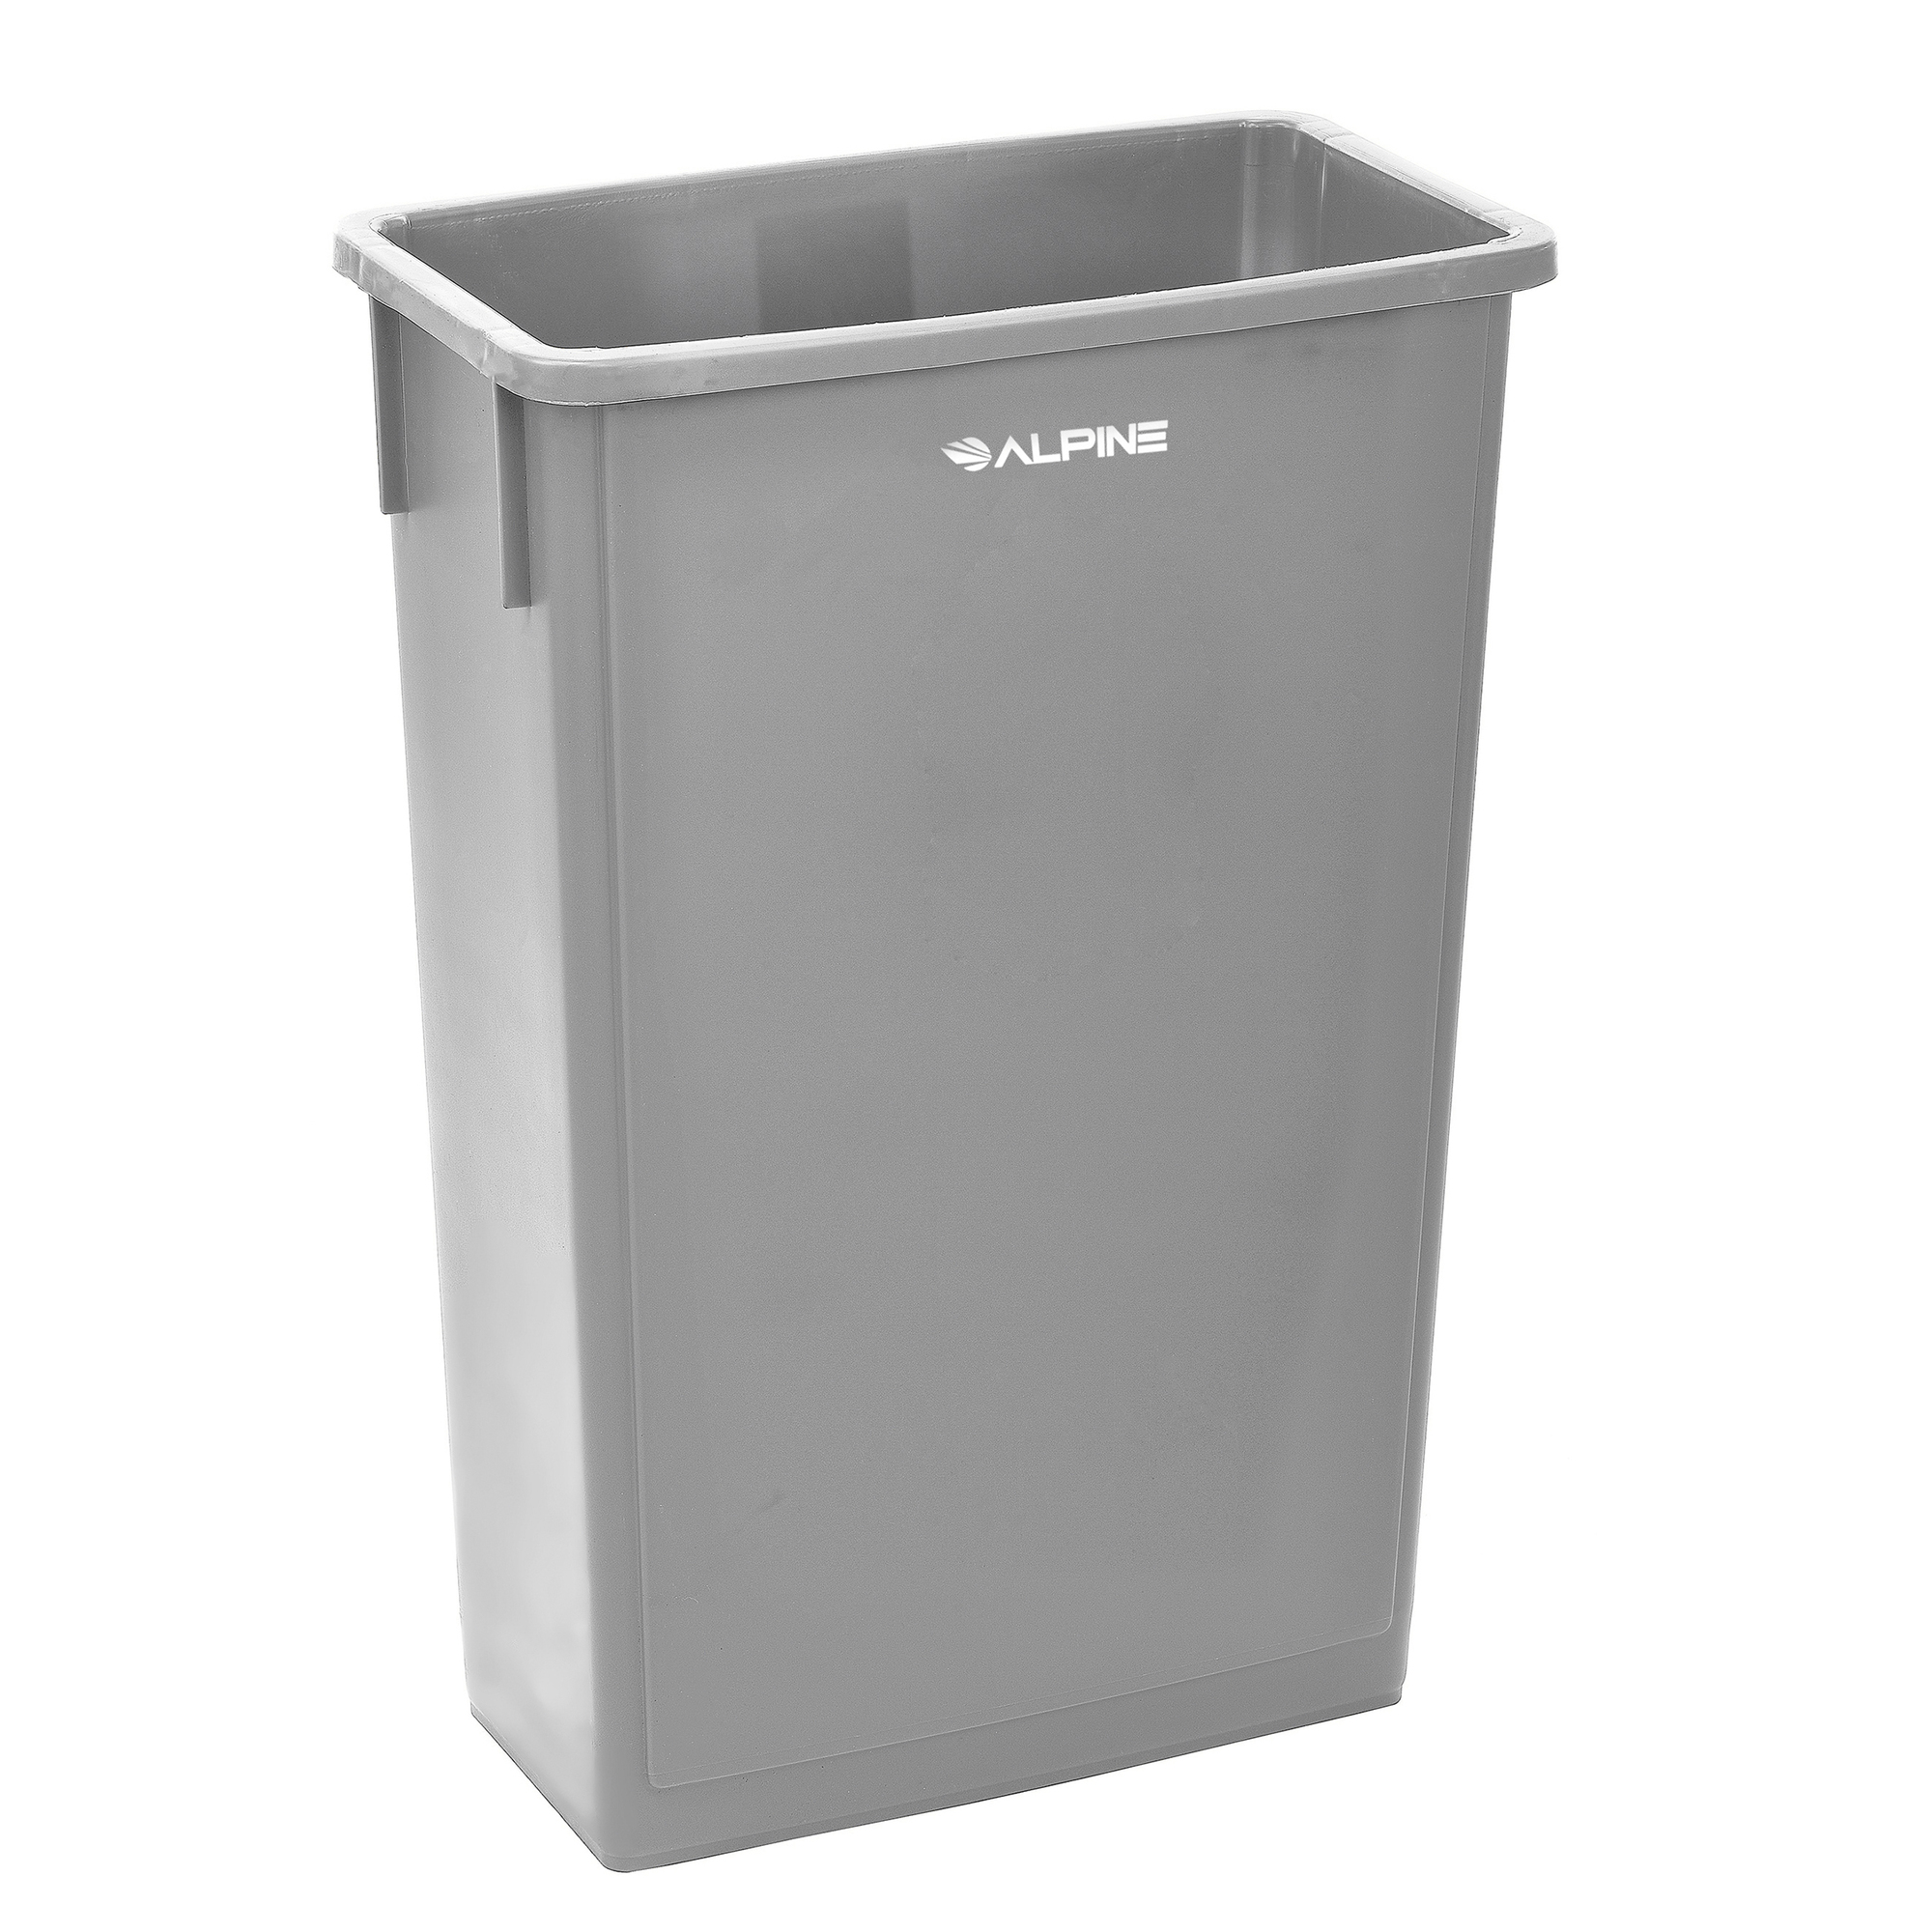 Alpine, 23 Gallon Slim Gray Waste Receptacle Trash Can, Capacity 23 Gal, Model ALP477-GRY